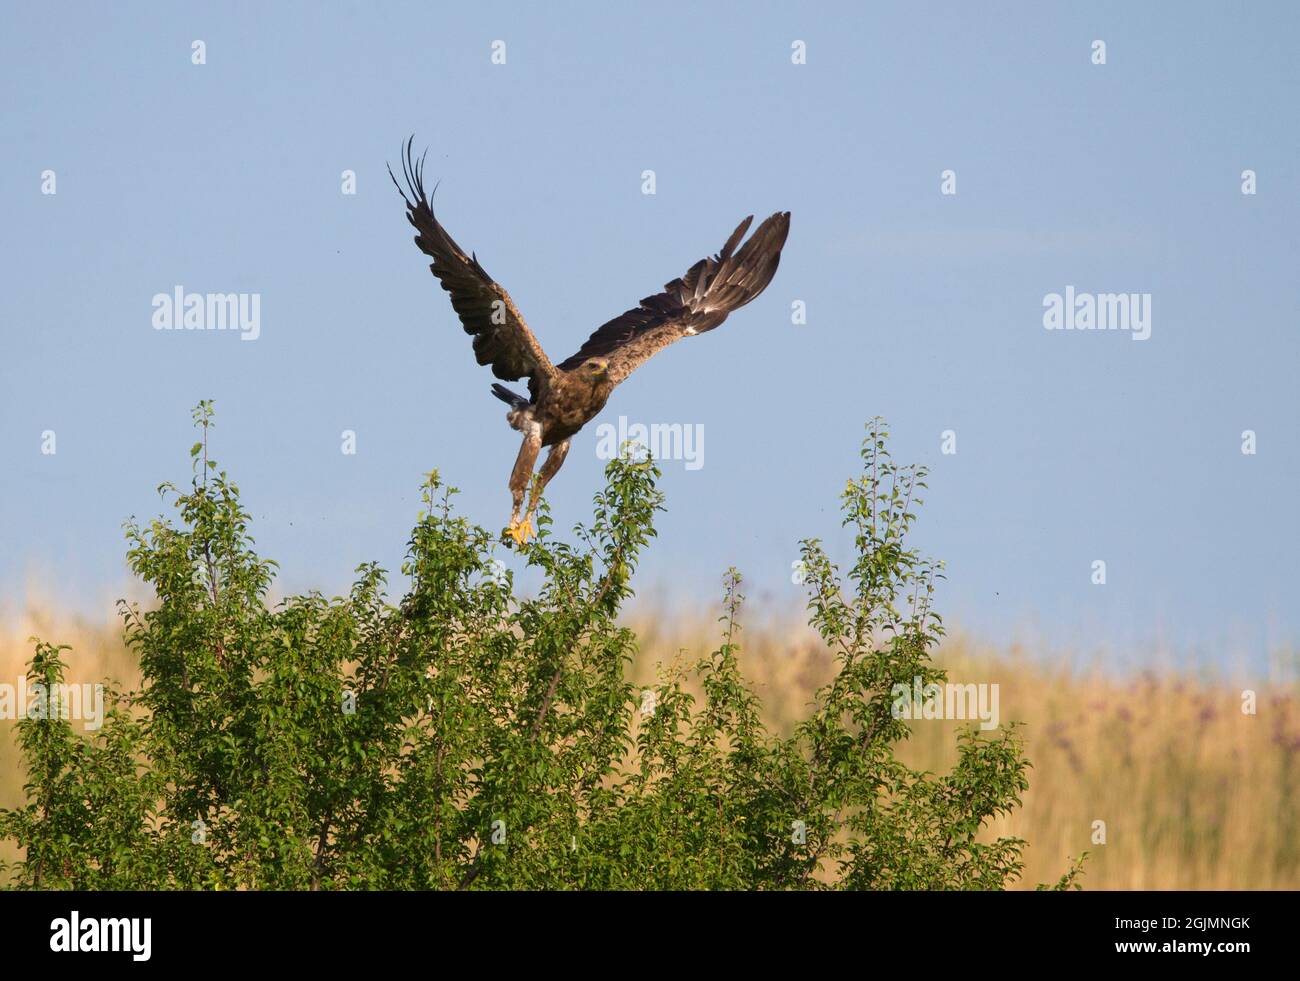 Flying Lesser spotted eagle (Clanga pomarina) Stock Photo